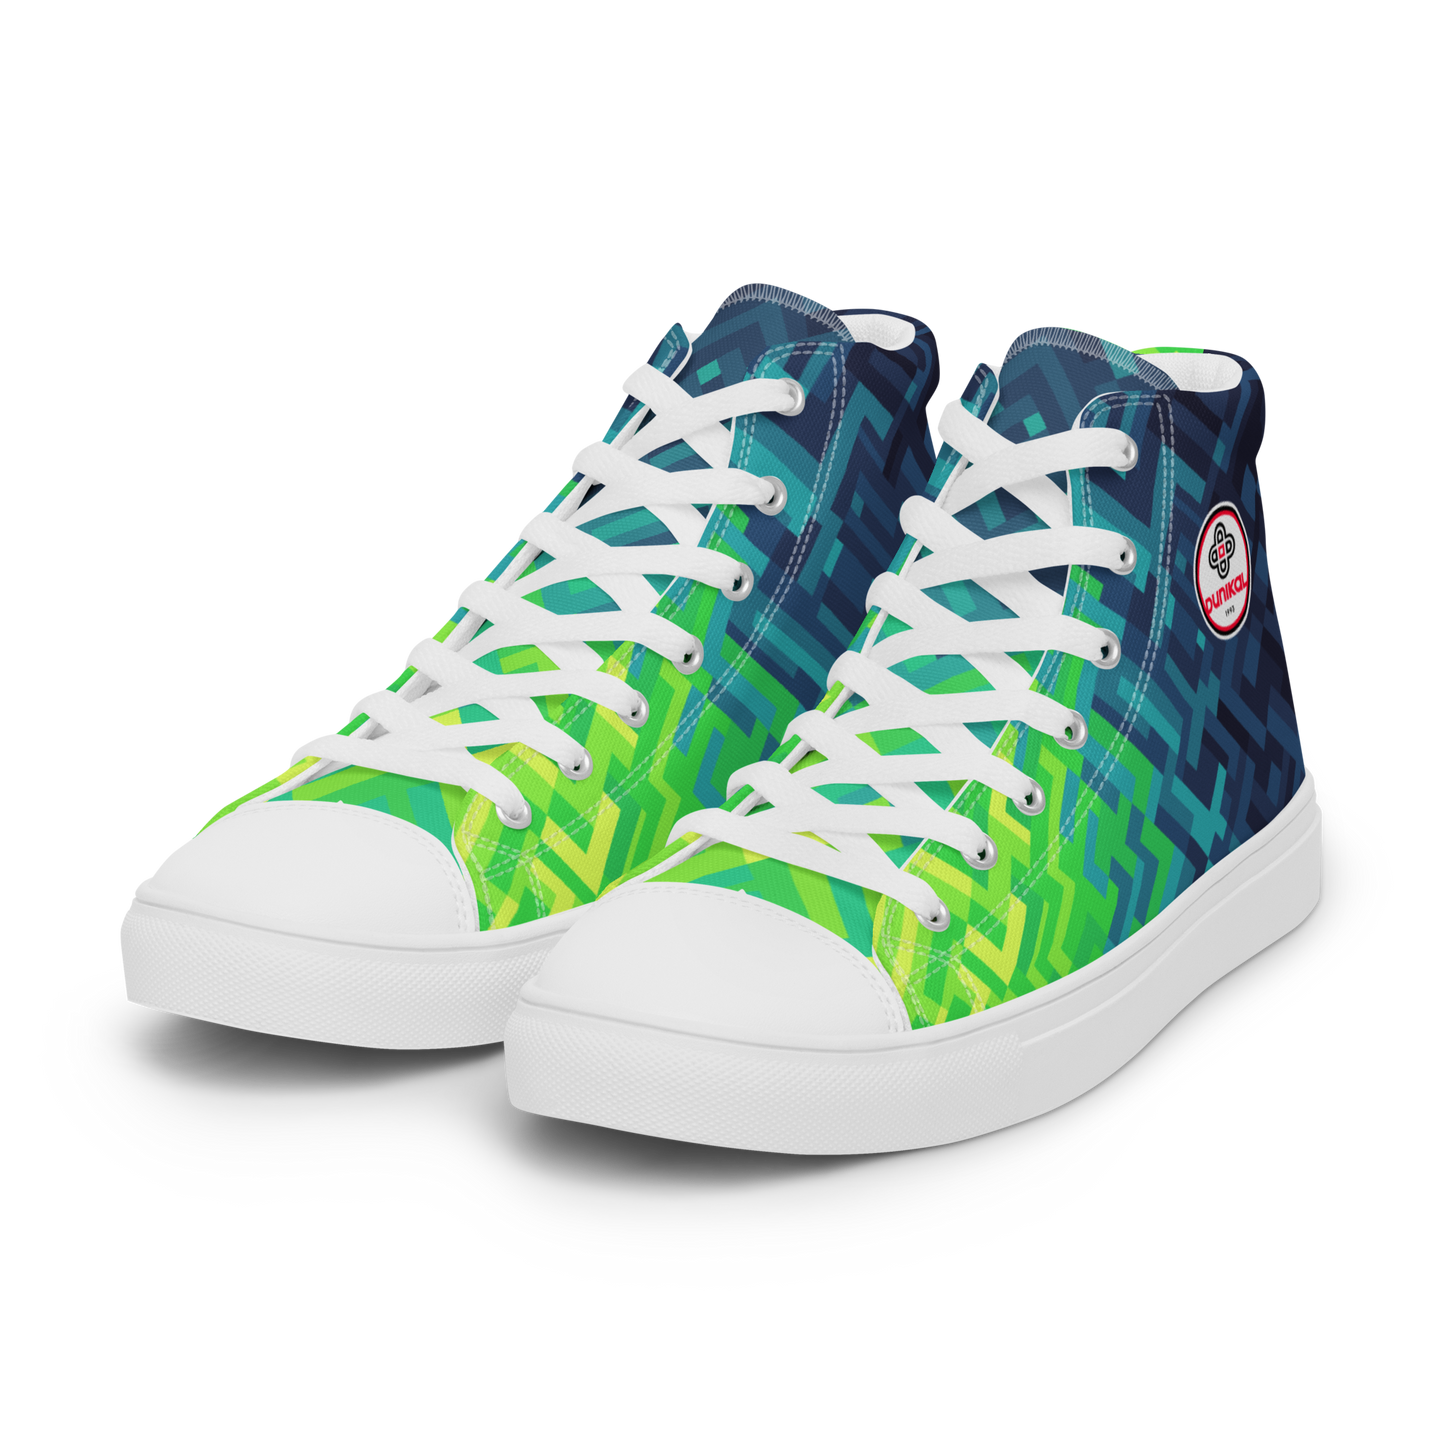 Women's Canvas Sneakers ❯ Polygonal Gradient ❯ Aurora Borealis